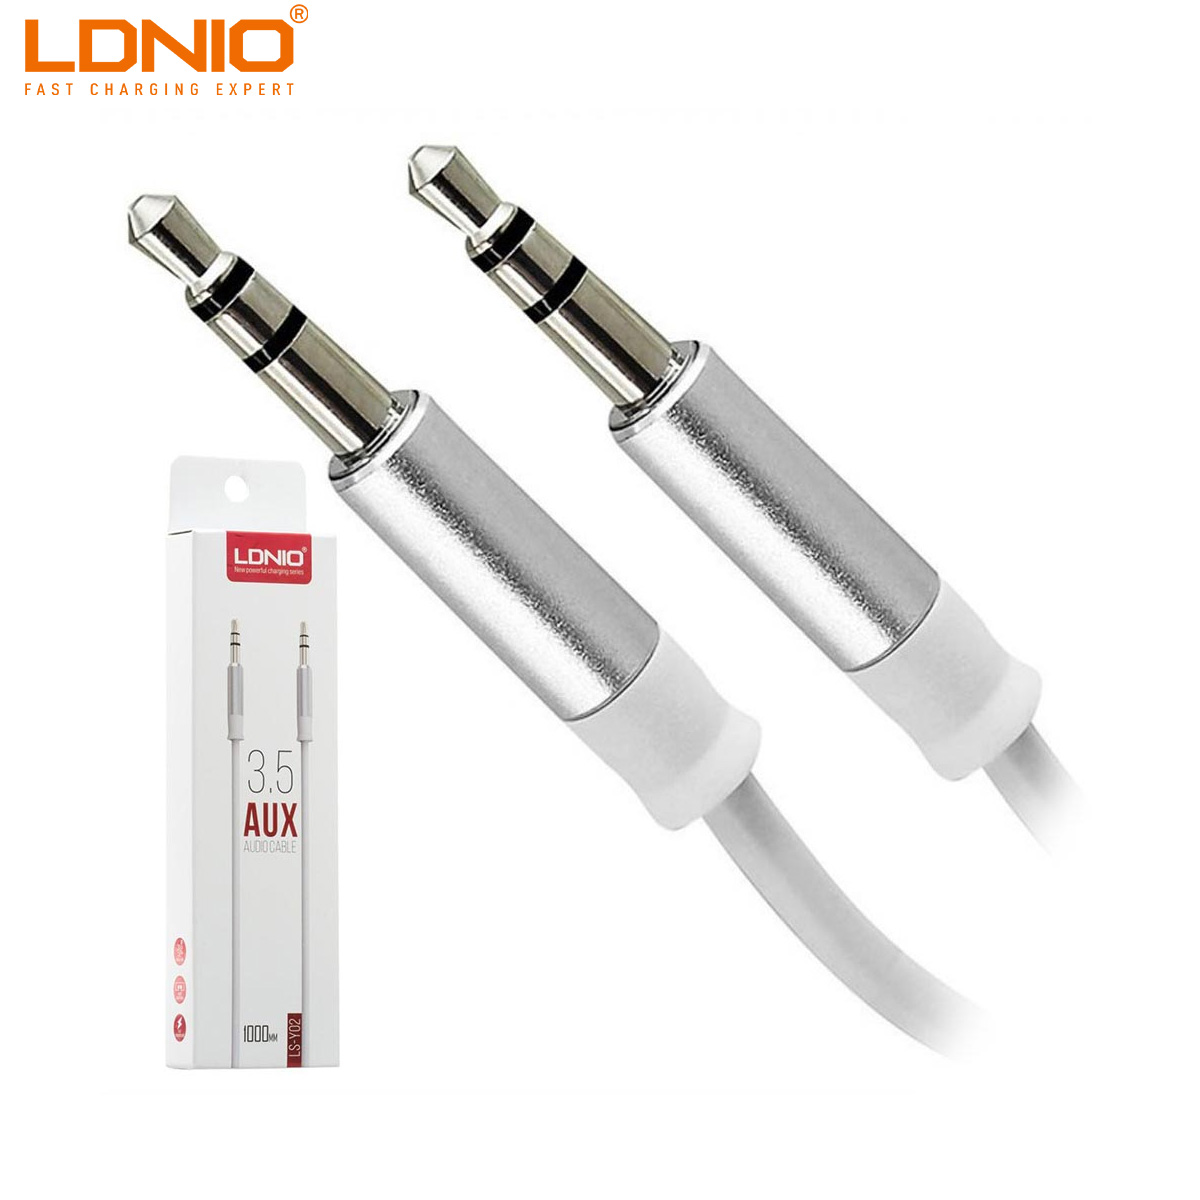 LDNIO LS-Y02 3.5 AUX Audio Cable